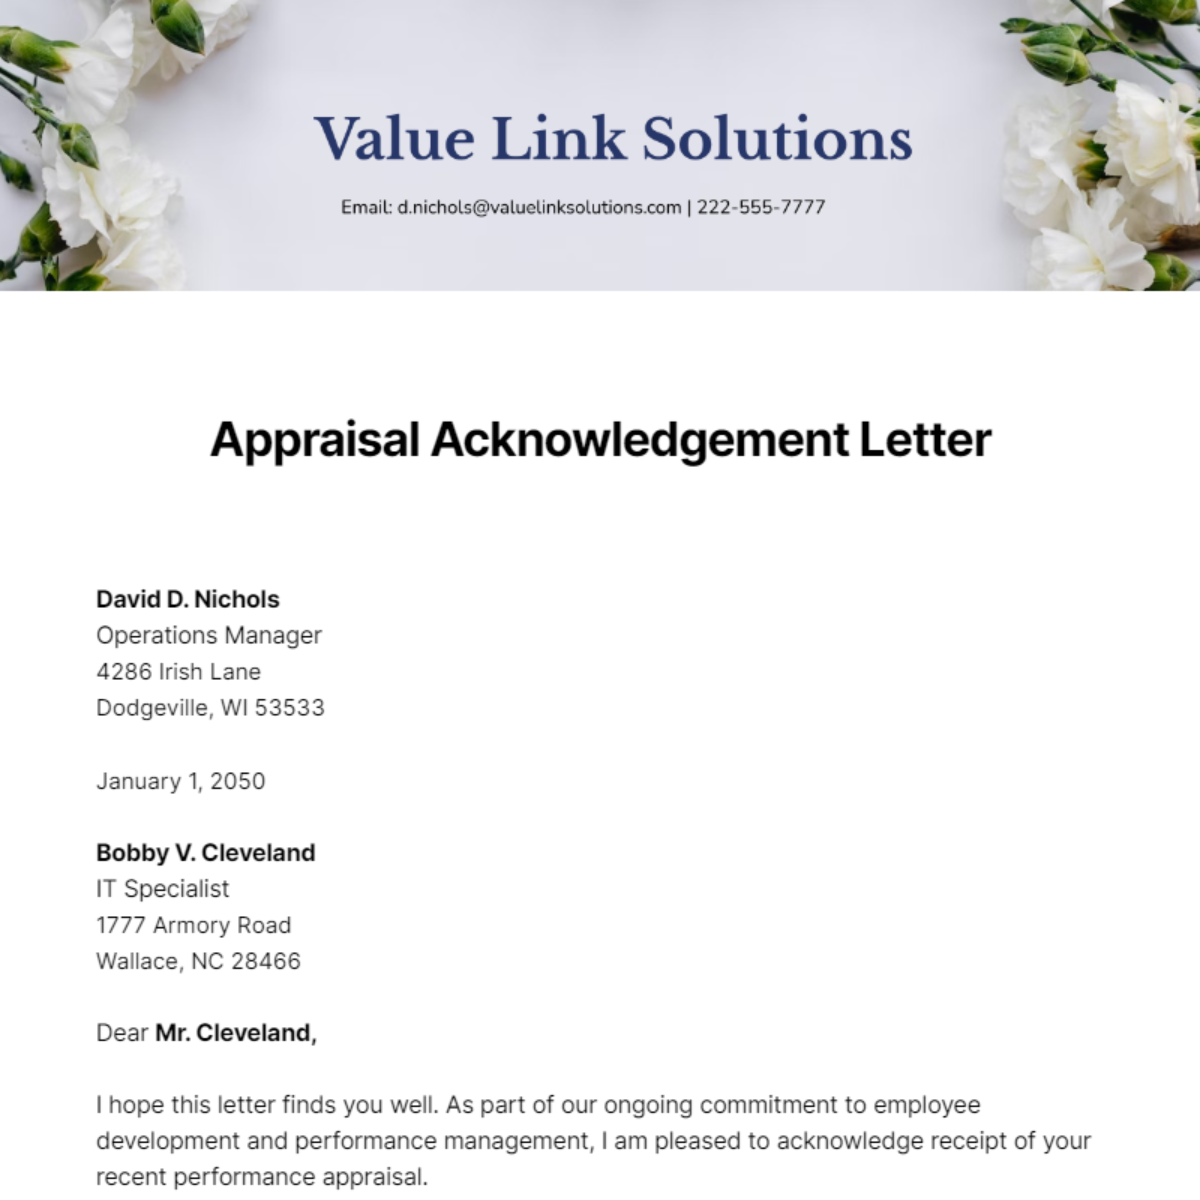 Appraisal Acknowledgement Letter Template